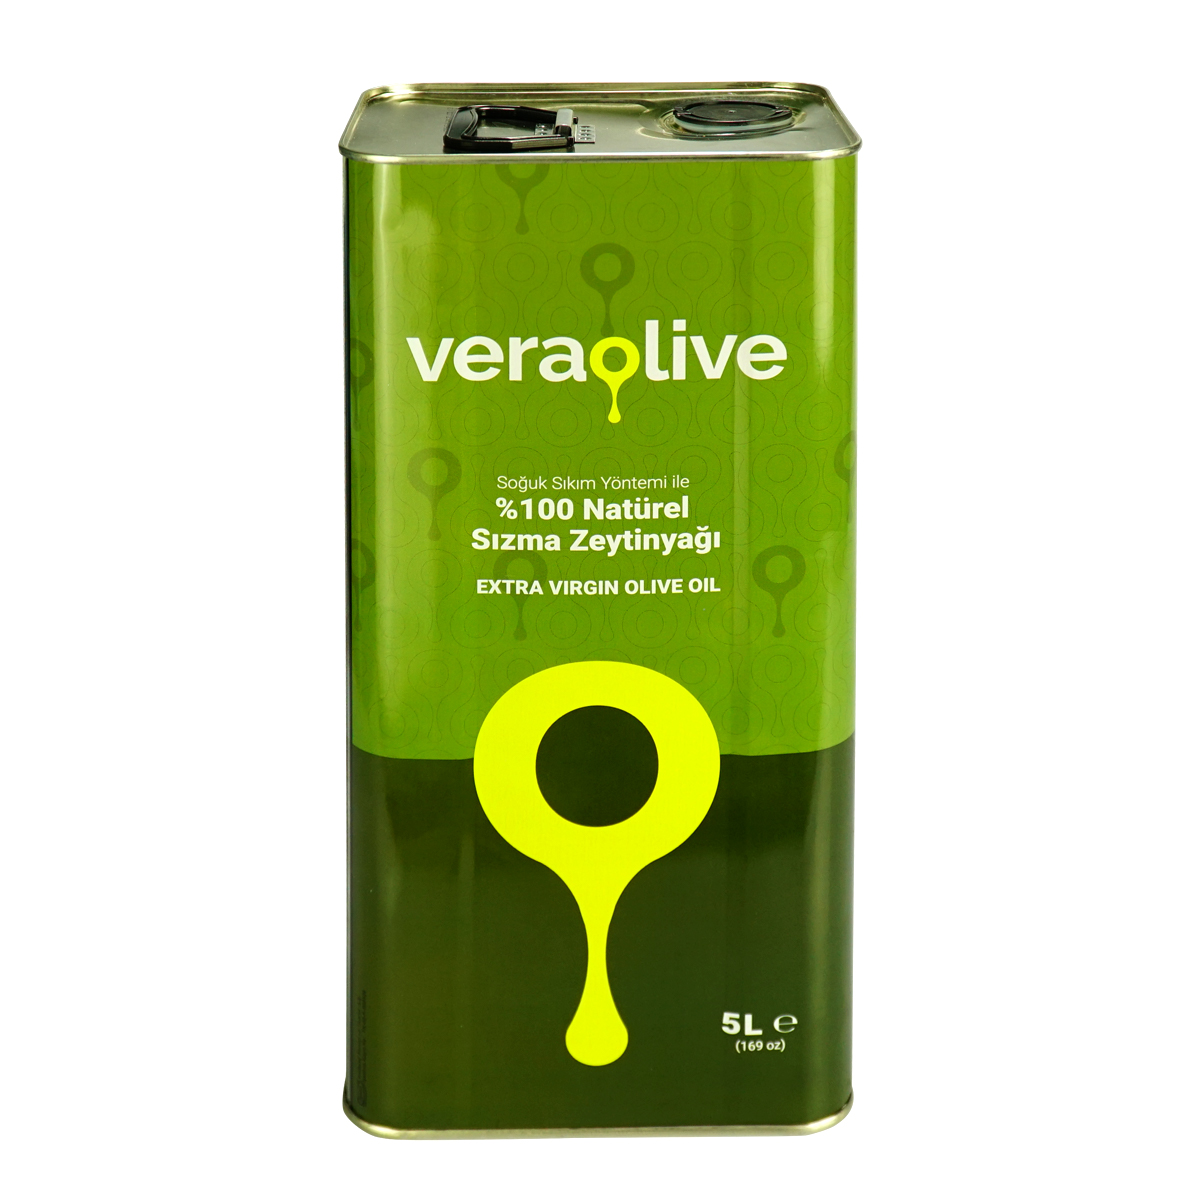 5 Litre Veraolive %100 Natürel Sızma Zeytinyağı